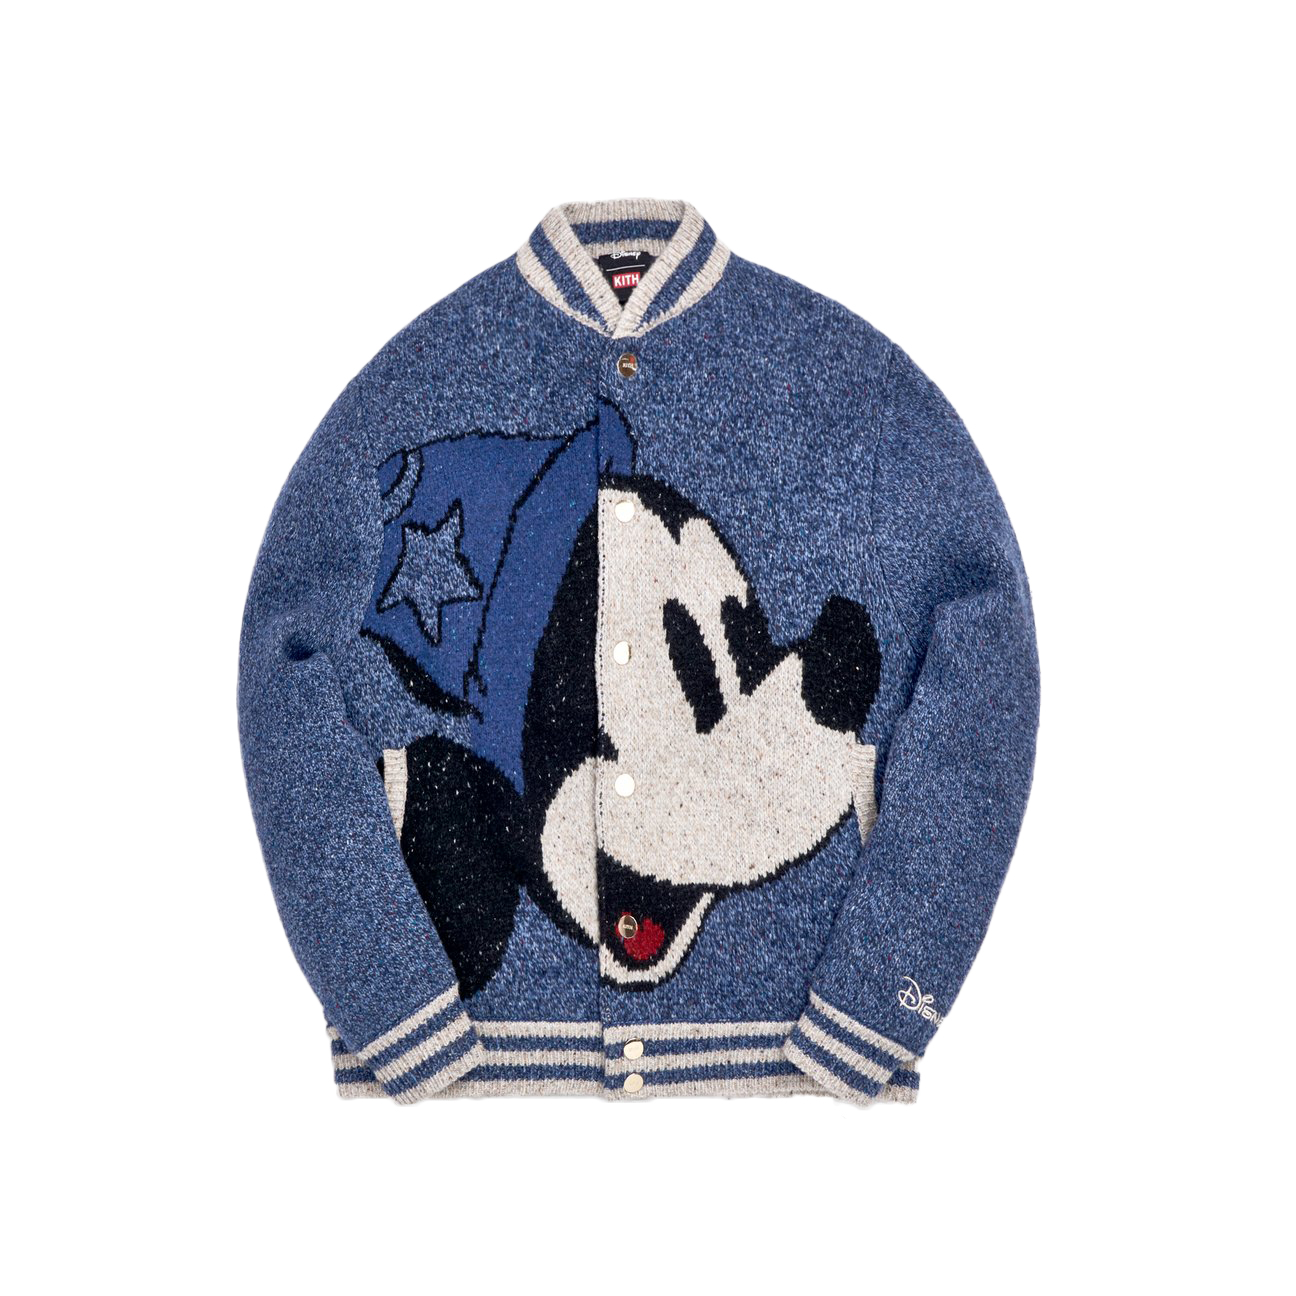 Kith x Disney Varsity Jacket Navy